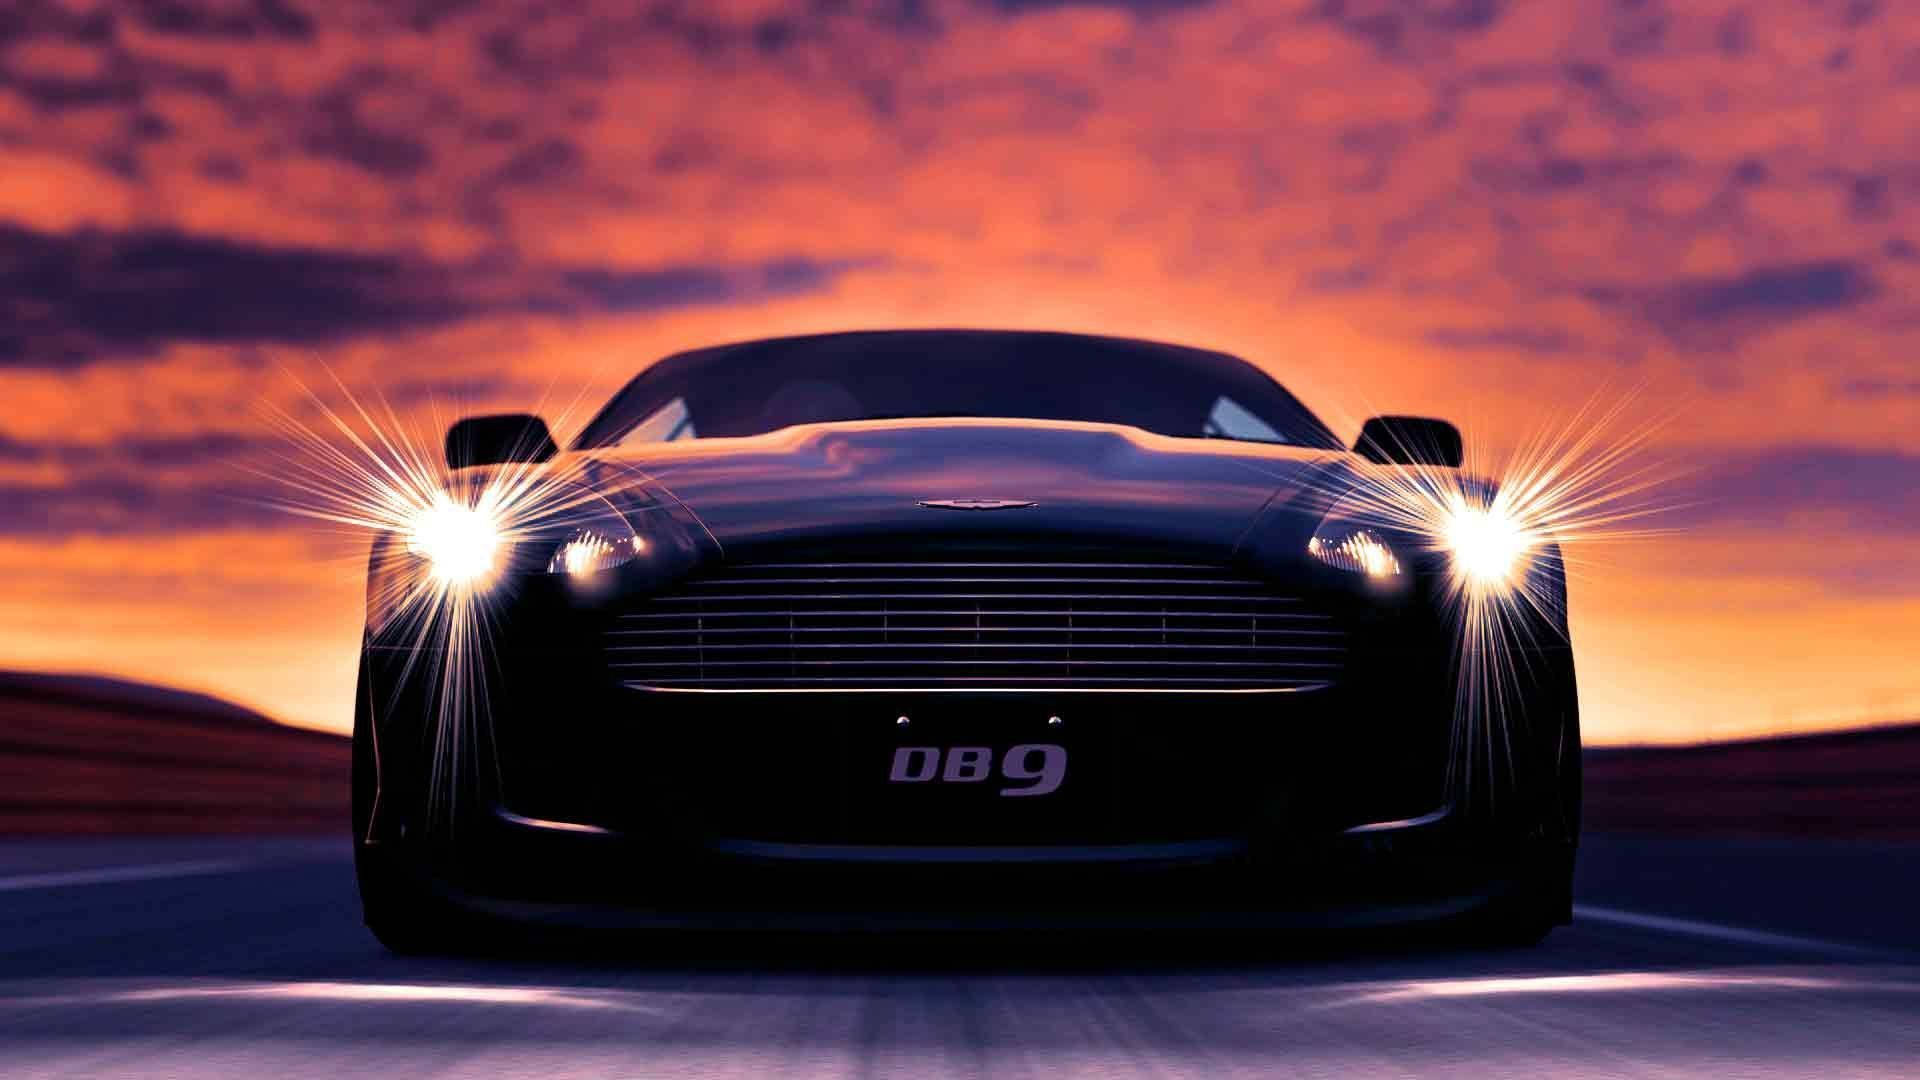 Aston Martin Db9 Background